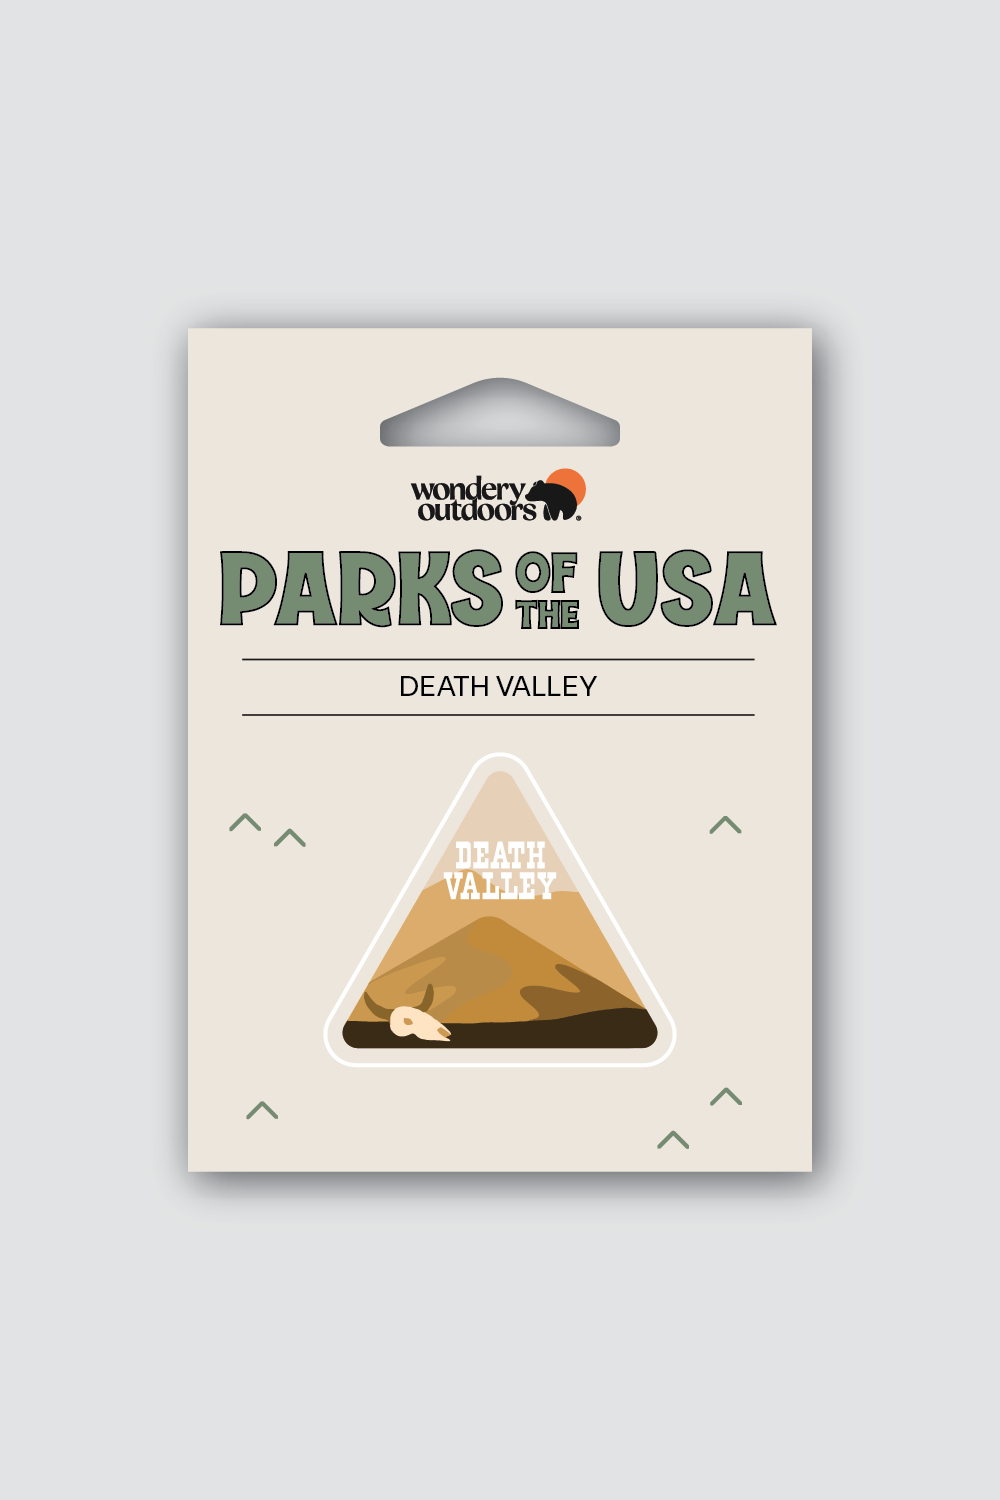 #national park_death valley _USA National Parks souvenir sticker gift sets